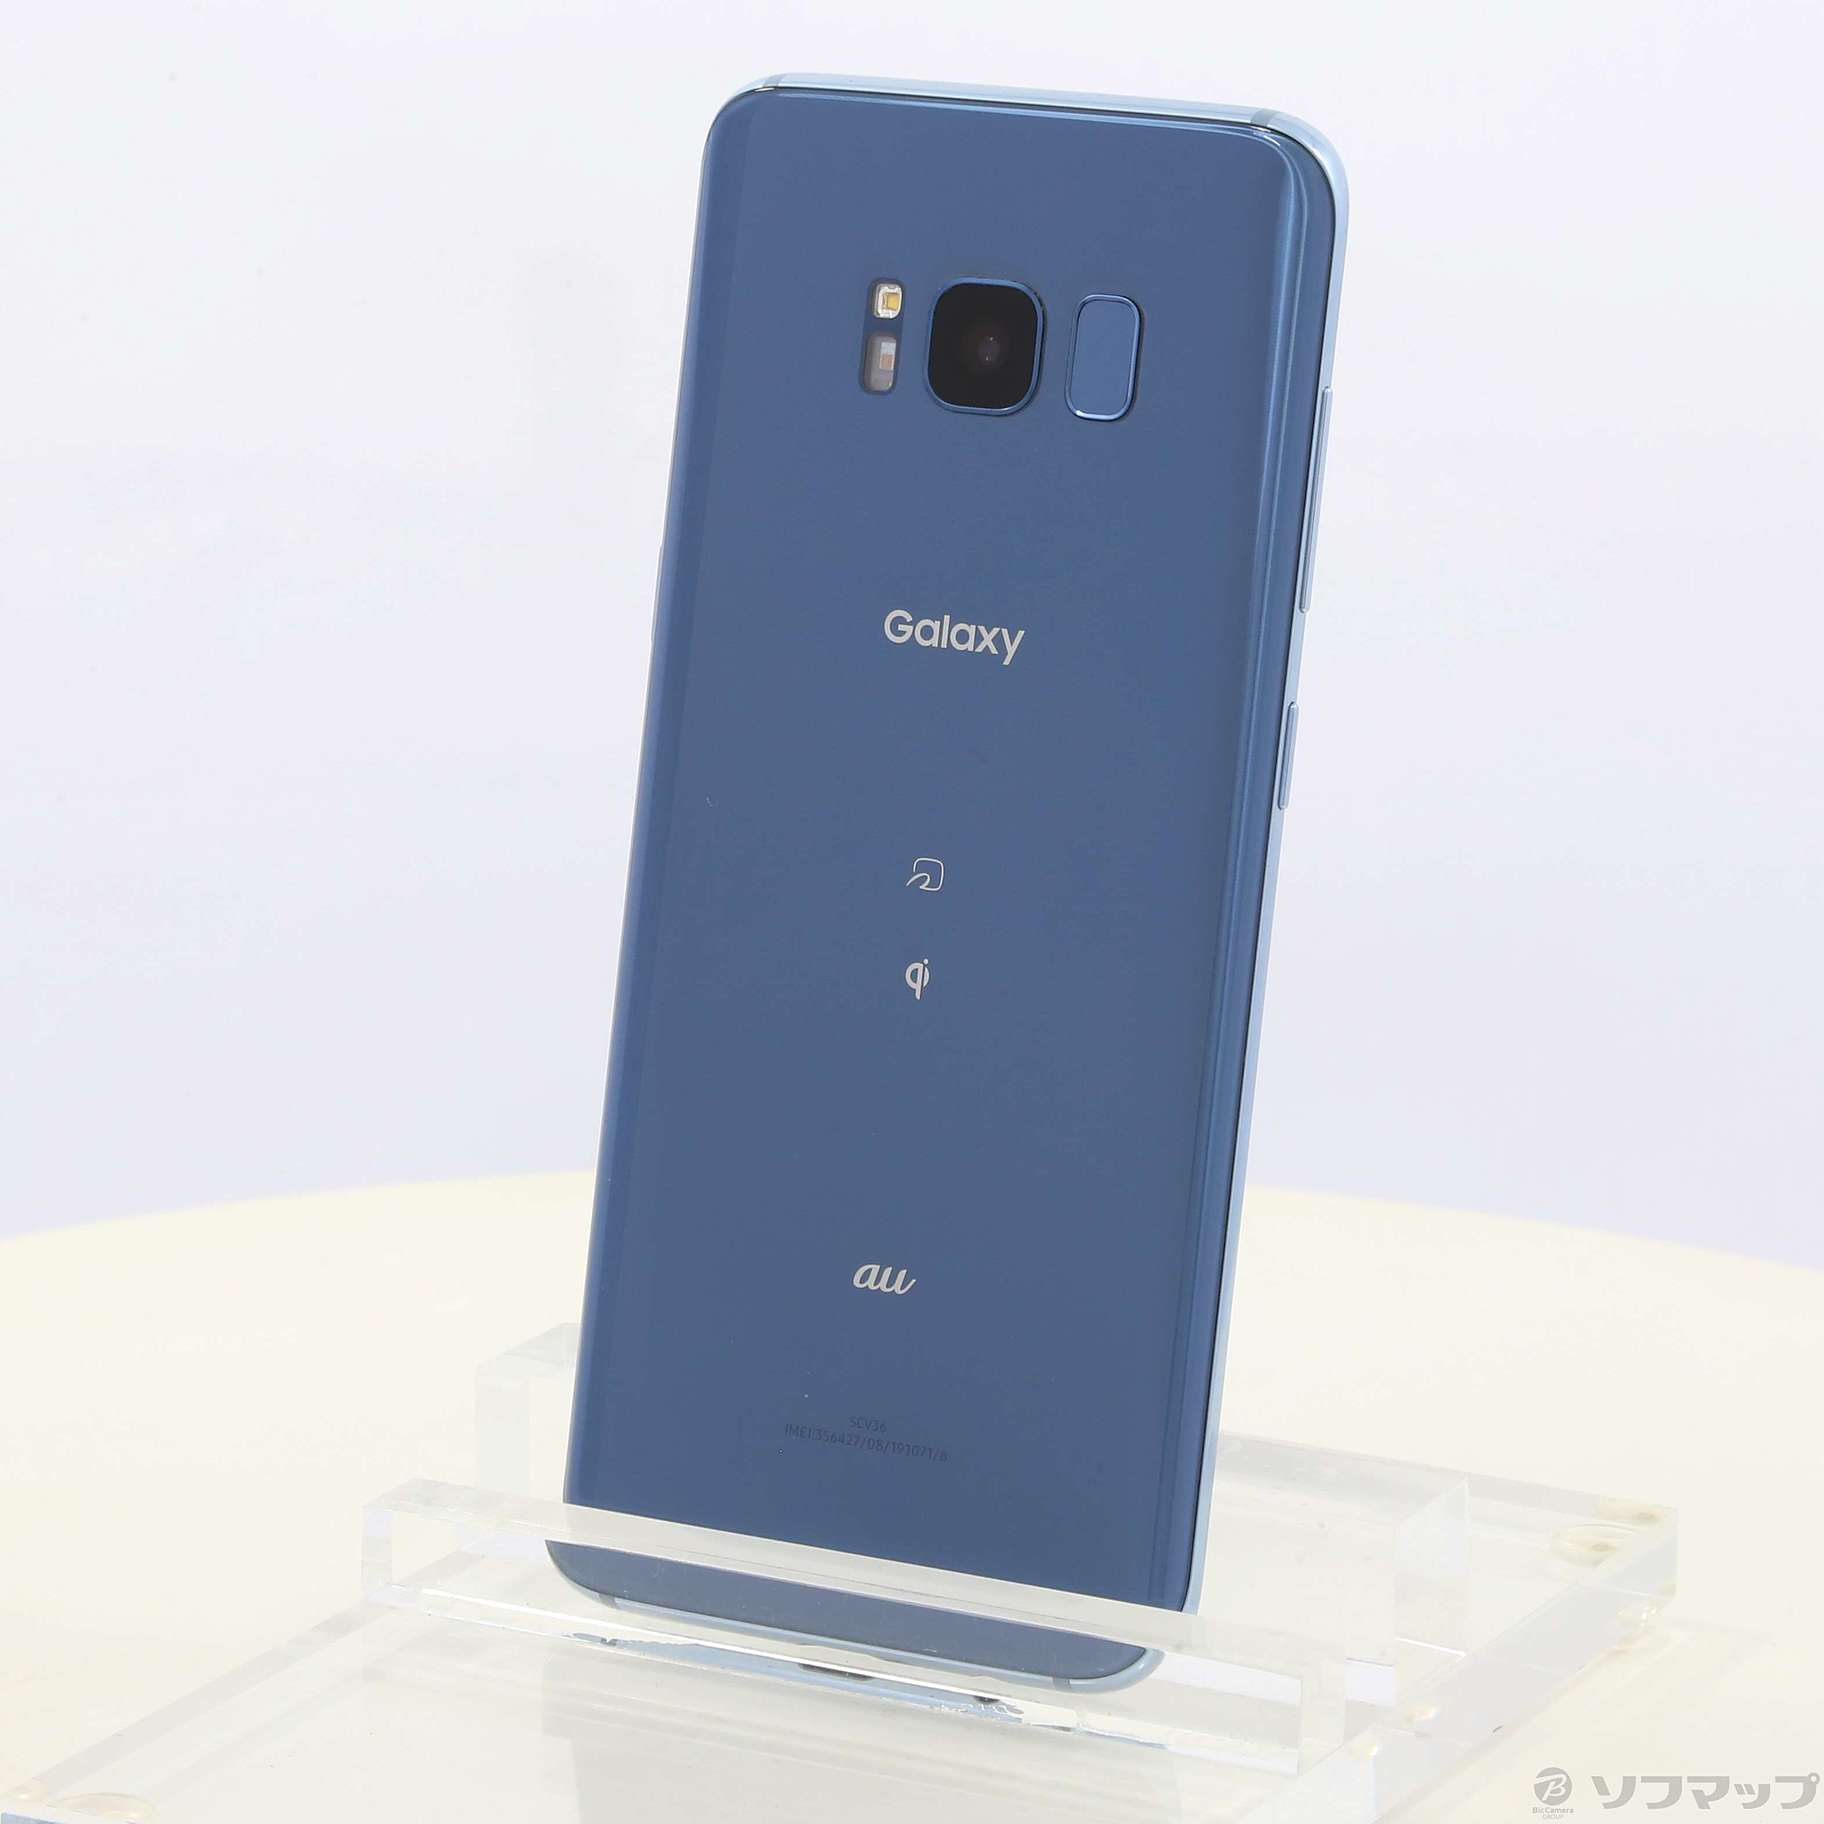 Galaxy S8 コーラルブルー 64GB SIMフリー - スマートフォン本体